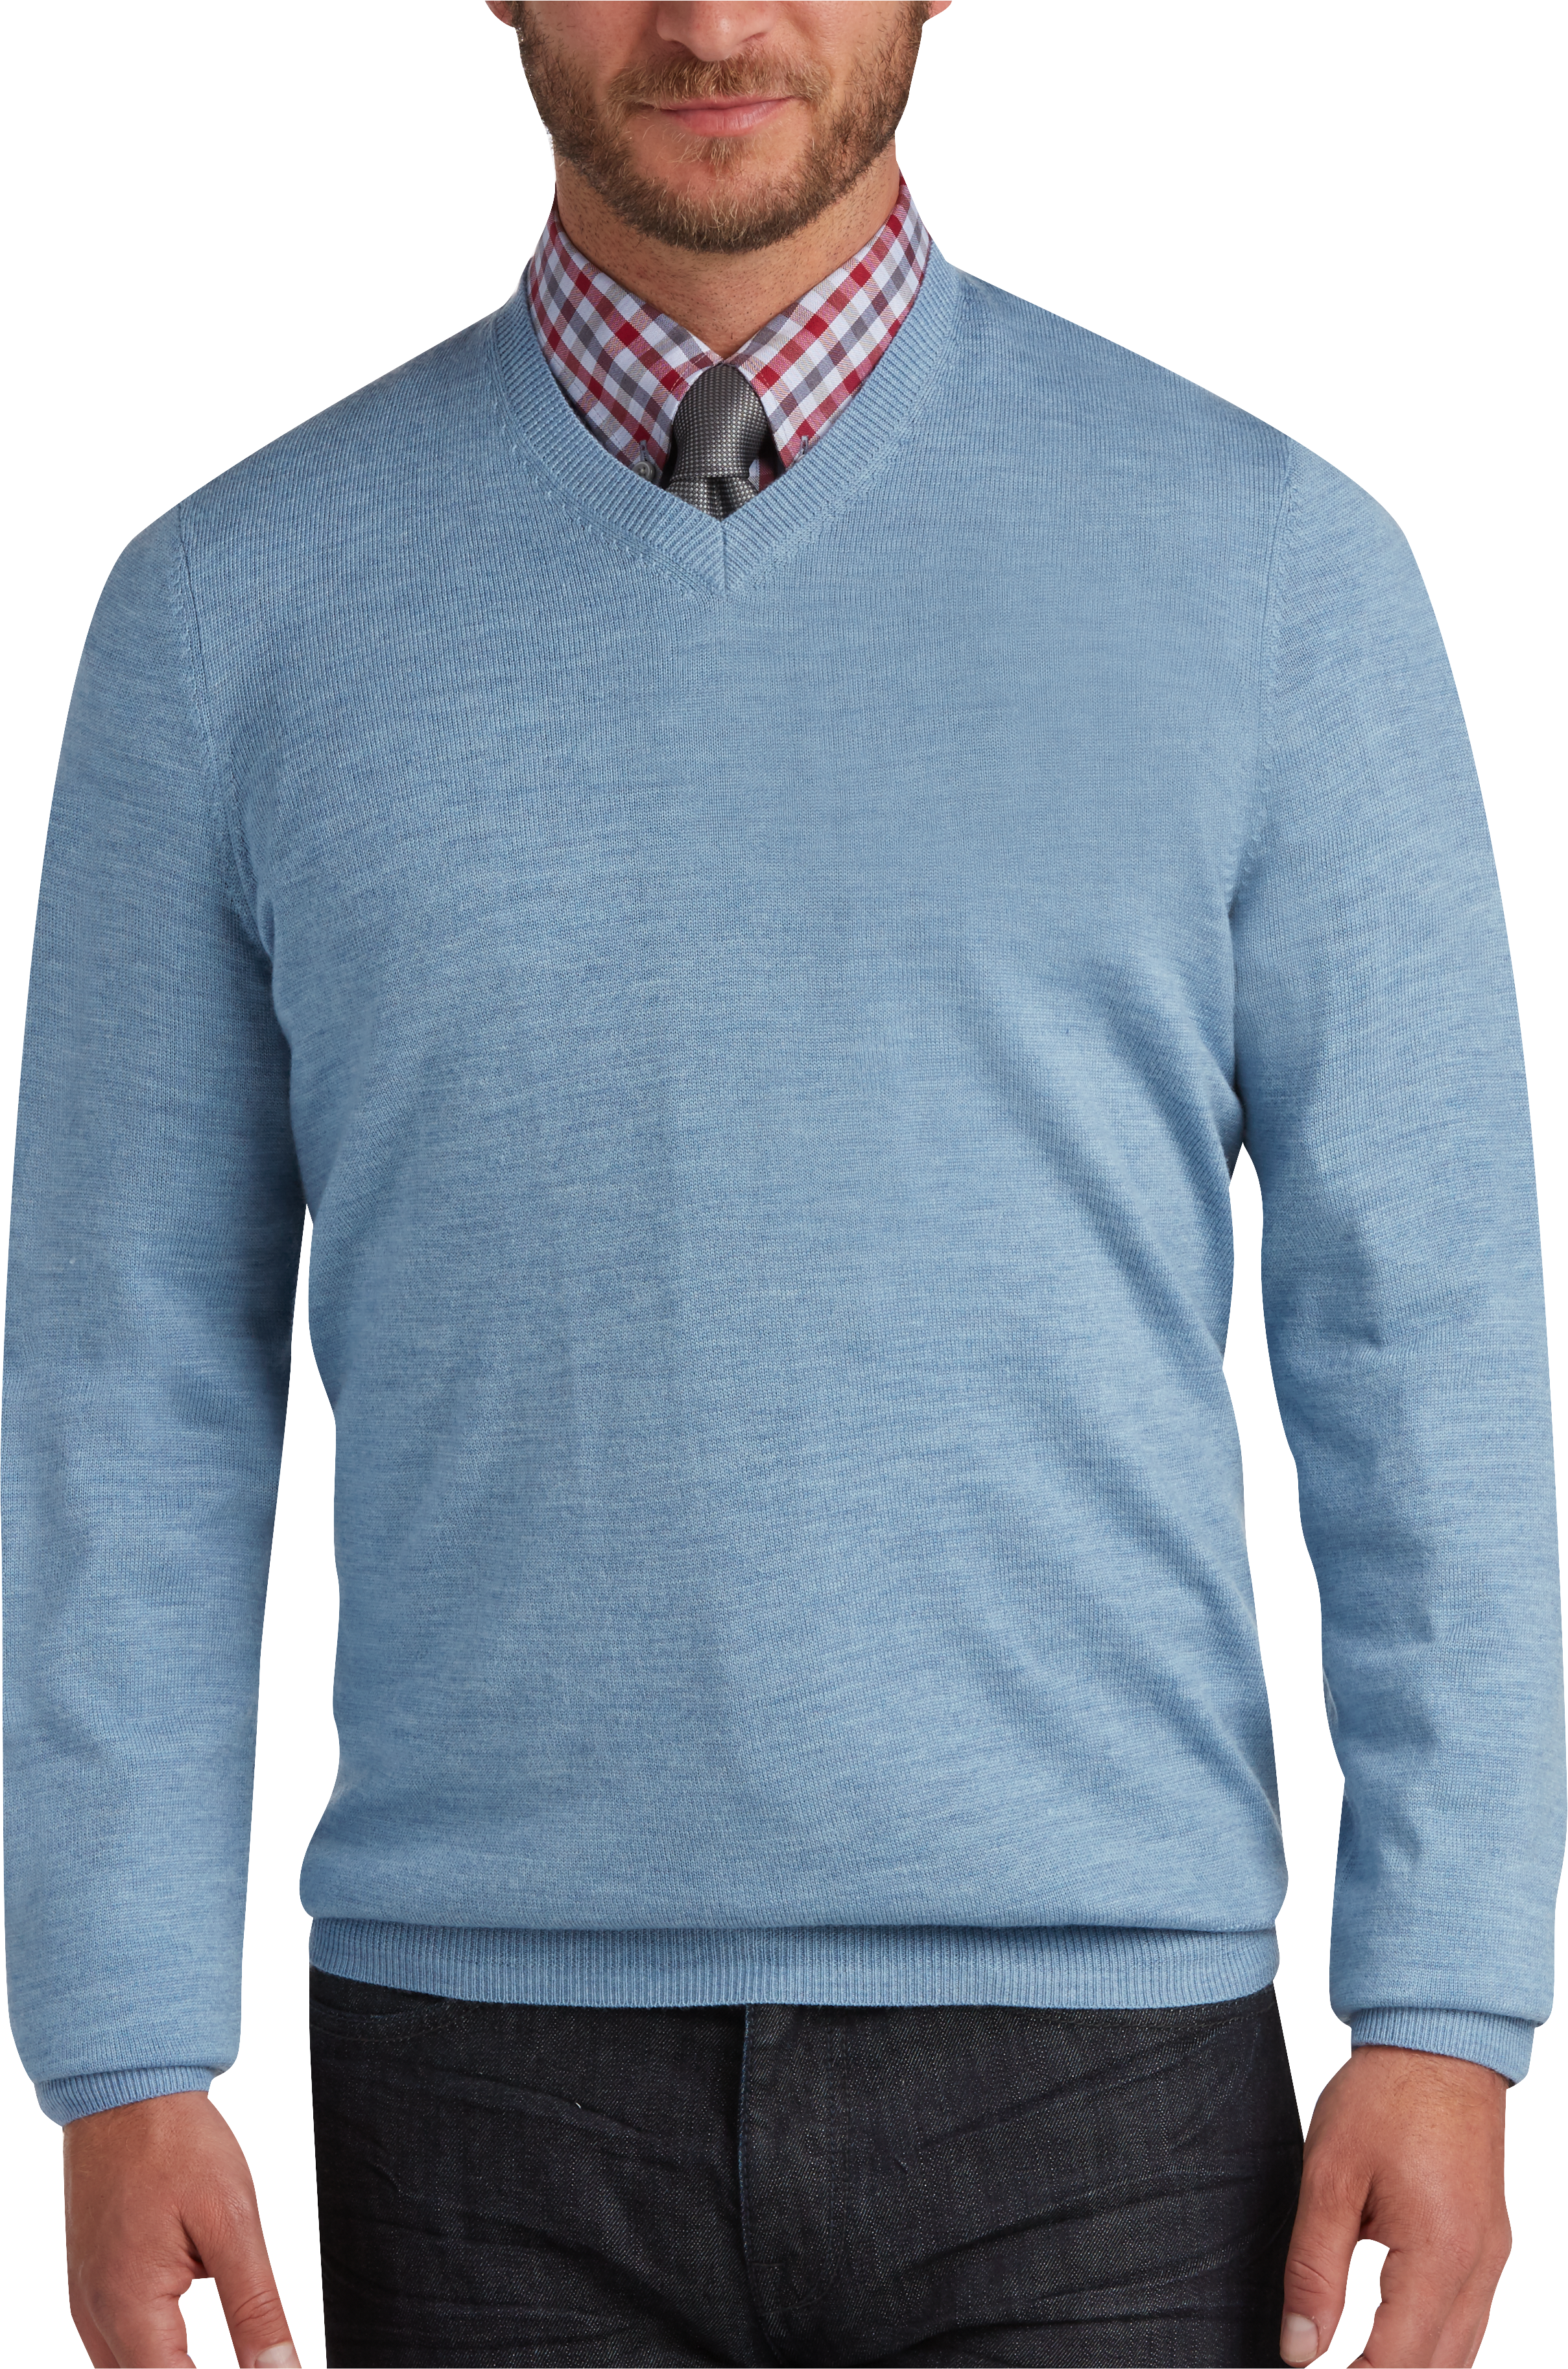 Joseph Abboud Light Blue V-Neck Merino Wool Sweater - Men's Sweaters ...